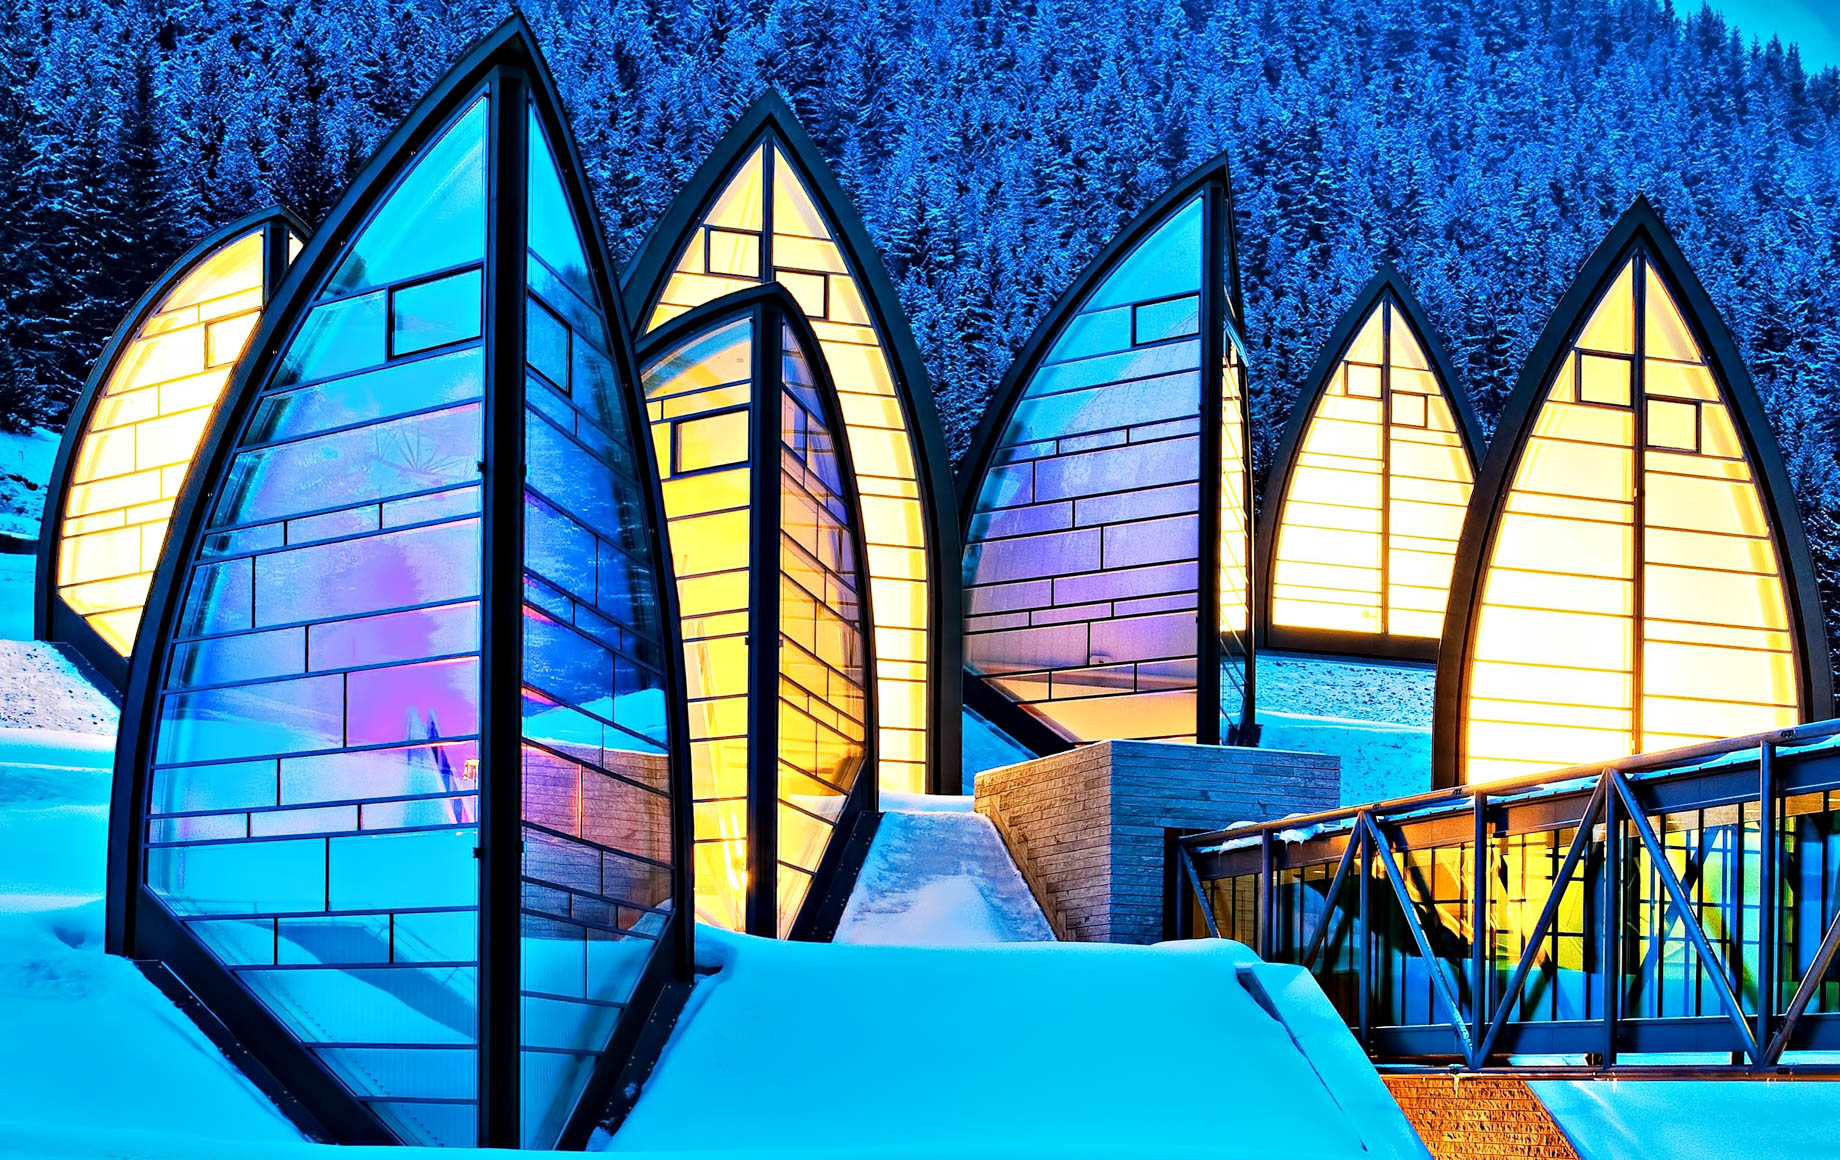 Tschuggen Grand Luxury Hotel - Arosa, Switzerland